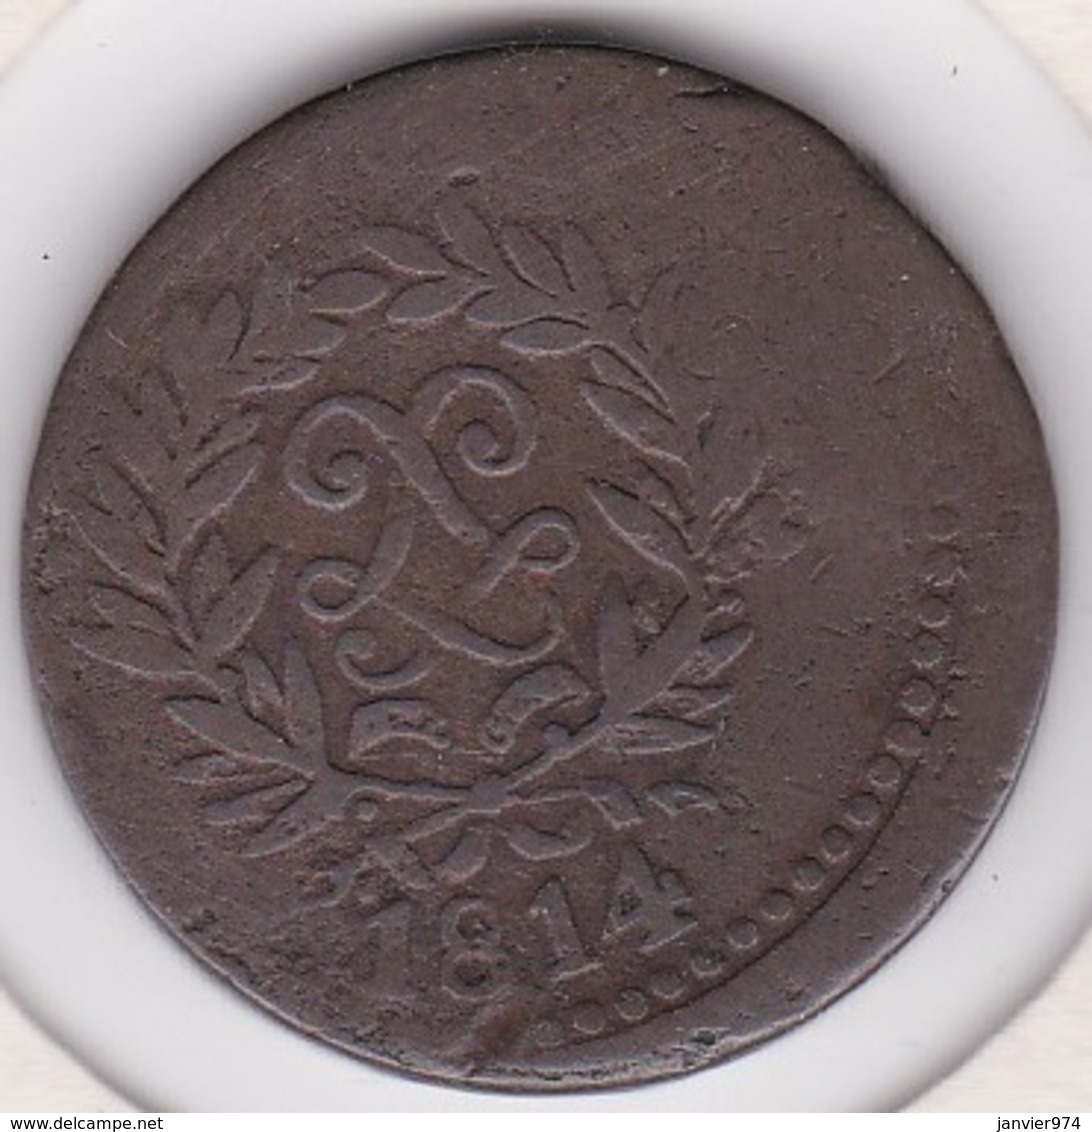 SIEGE D’ANVERS. 5 CENTIMES 1814. Louis XVIII, Frappe Médaille, RARE - 1814 Beleg Van Antwerpen